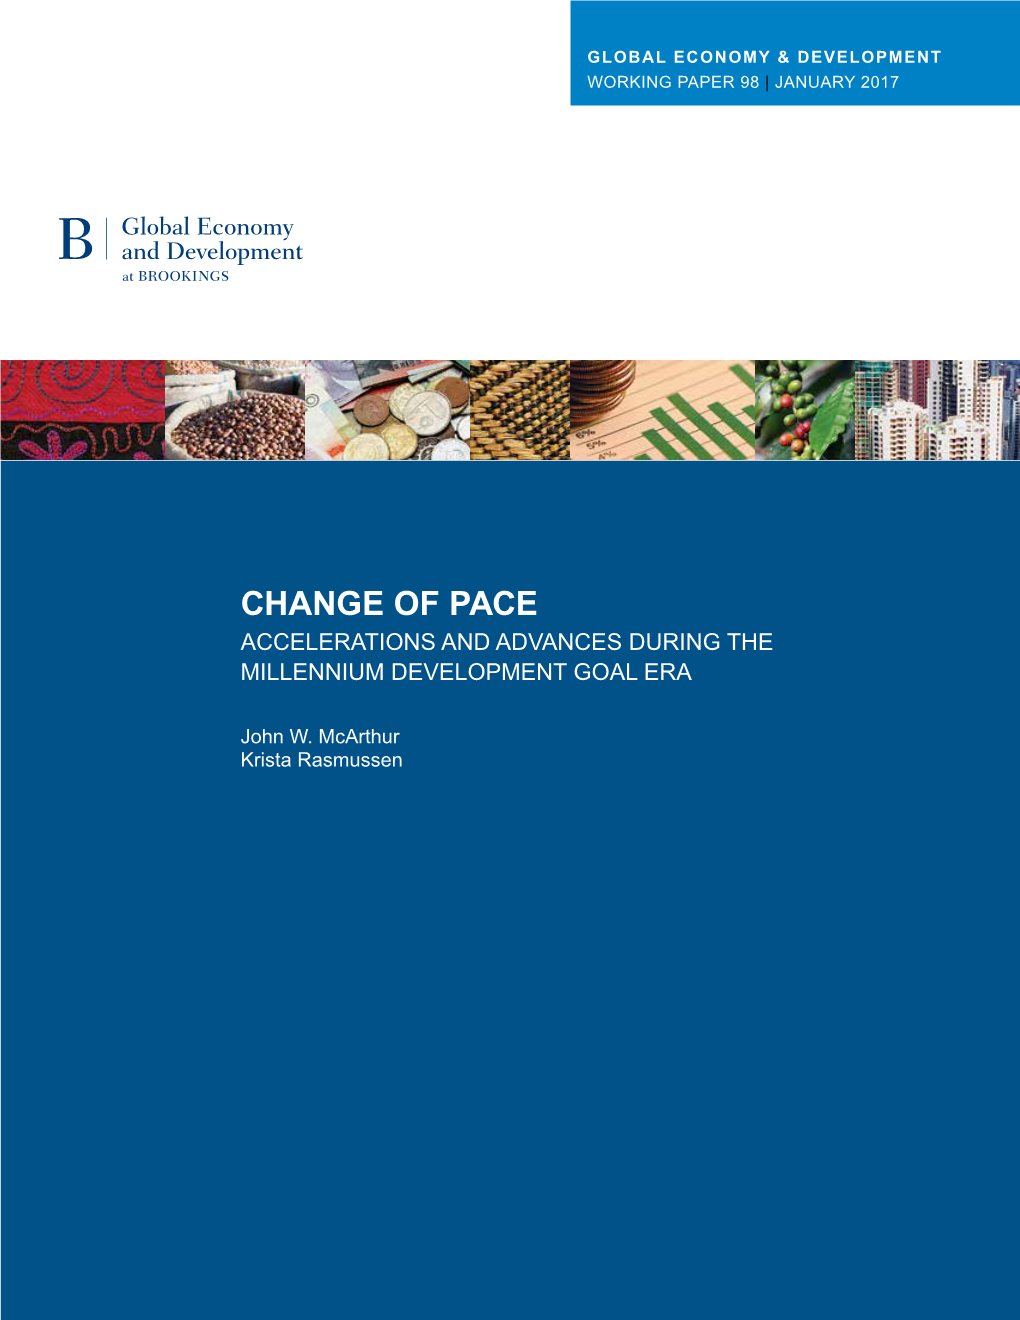 Change of Pace Accelerations and Advances During the Millennium Development Goal Era